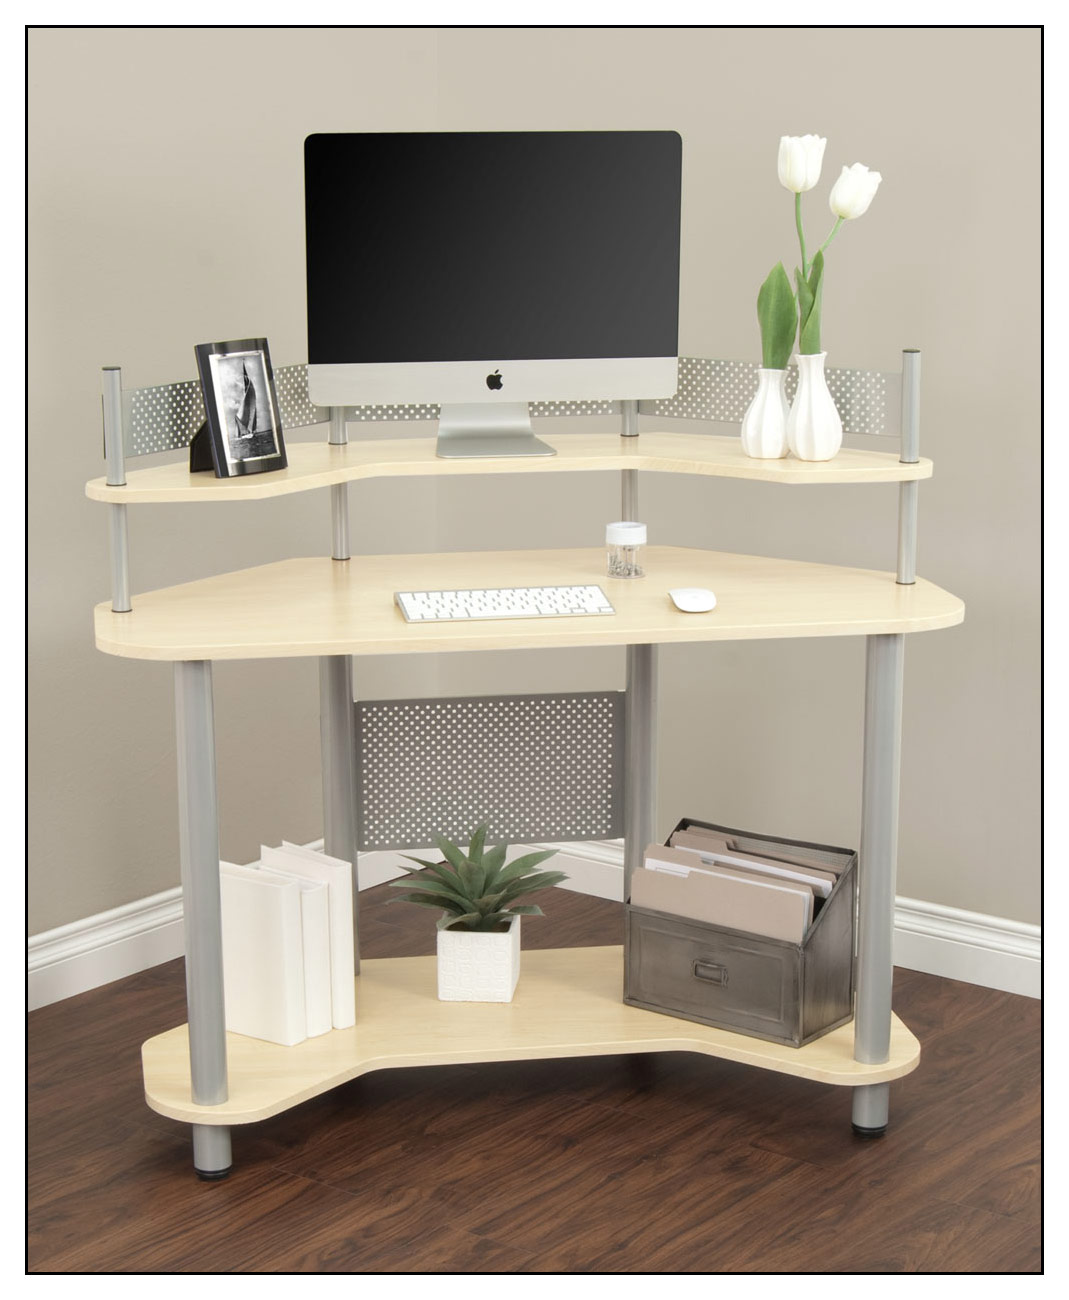 Calico Designs - Study Corner Desk - Silver/Maple was $161.99 now $121.99 (25.0% off)